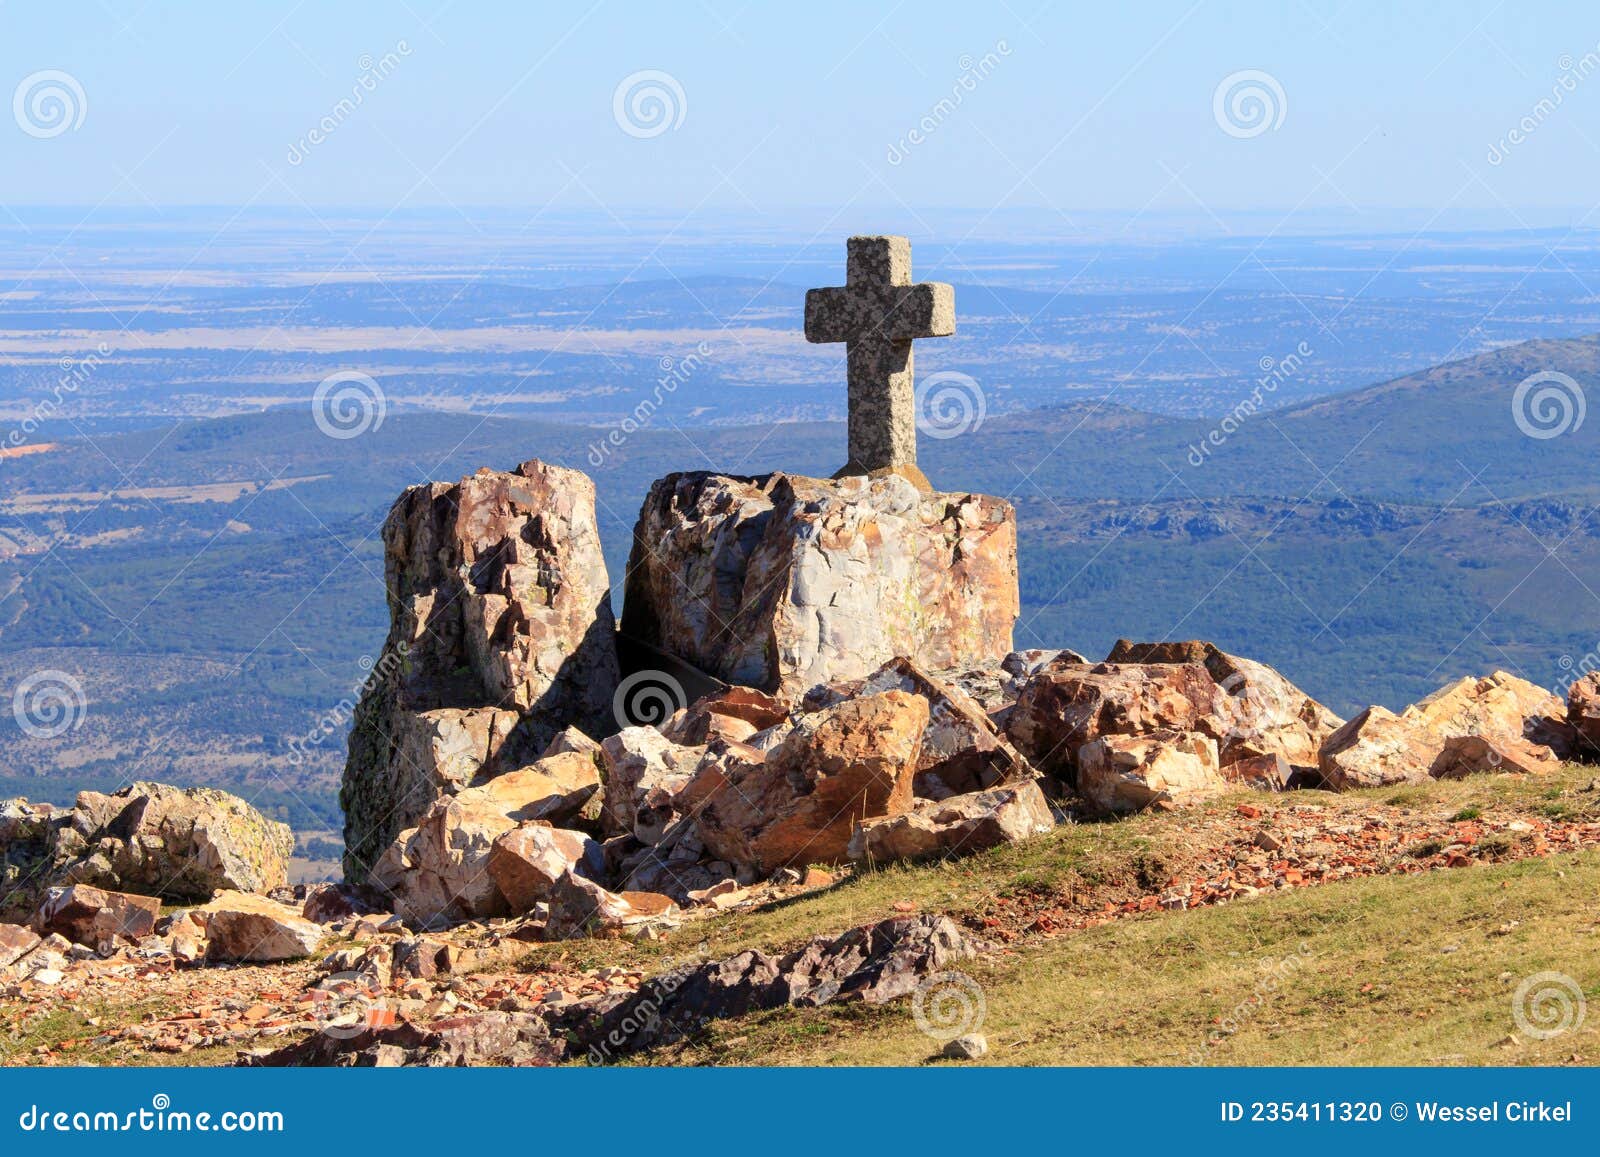 stone cross near santuario de nuestra senora de la pena de francia, spain